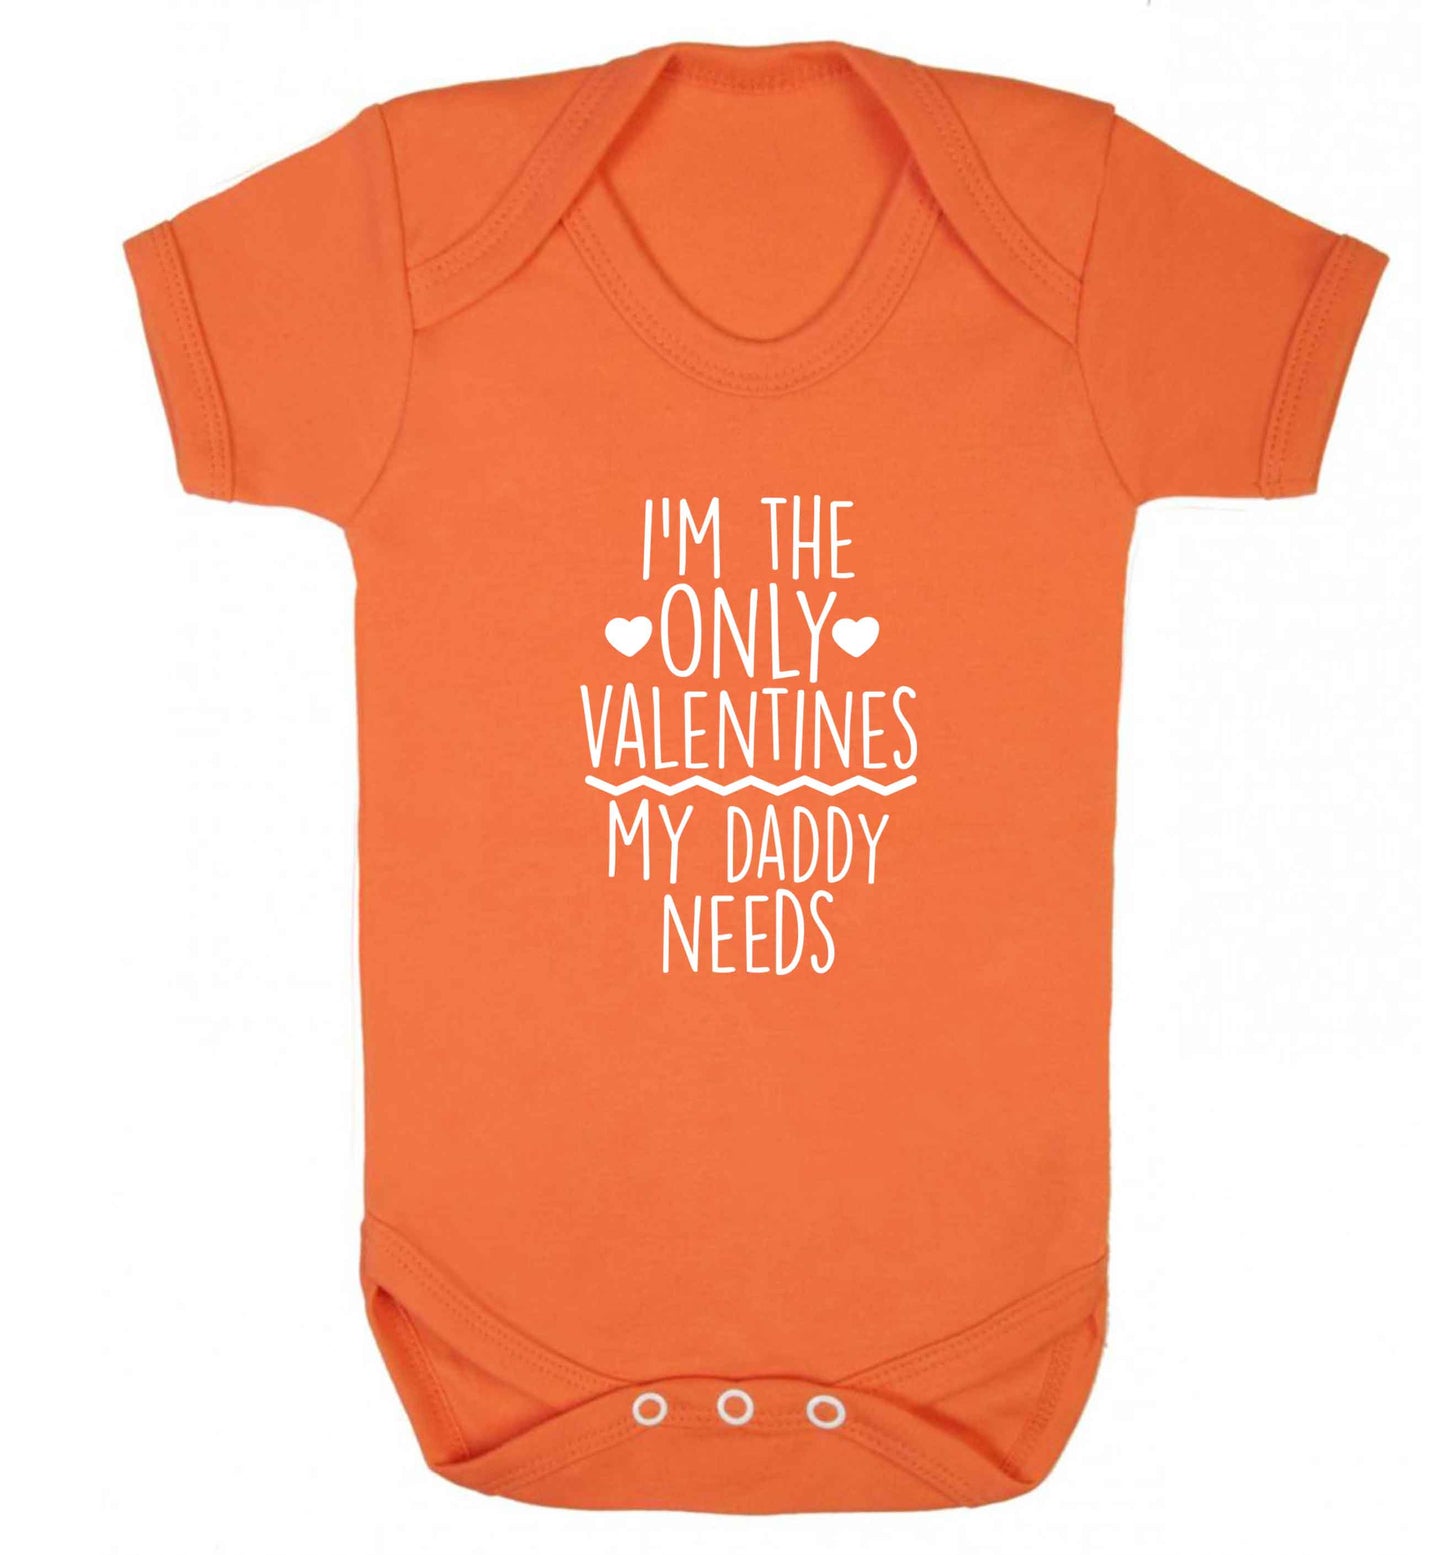 I'm the only valentines my daddy needs baby vest orange 18-24 months